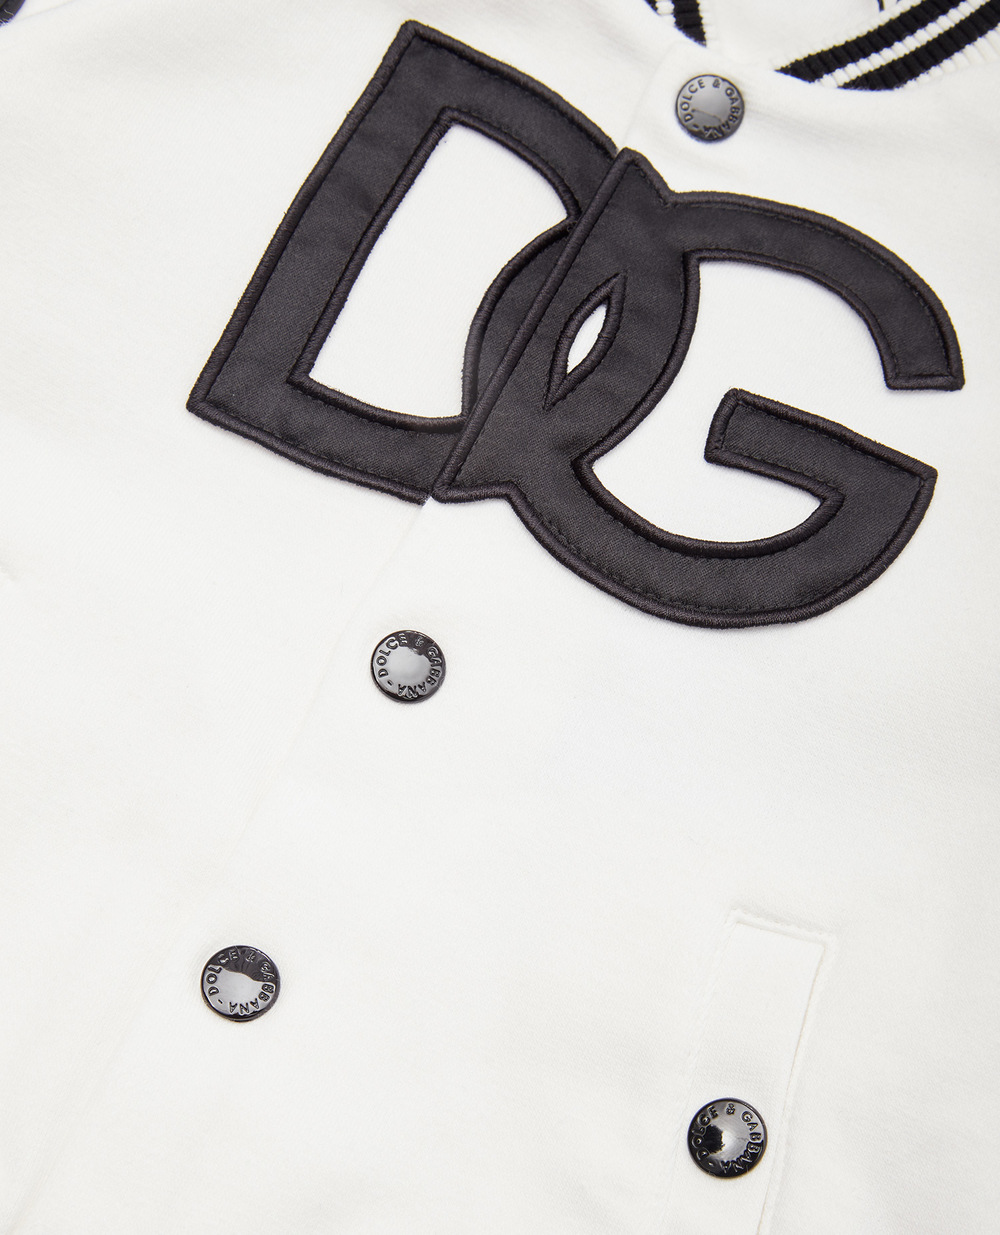 Бомбер Dolce&Gabbana Kids L1JWDK-G7B8G, белый цвет • Купить в интернет-магазине Kameron